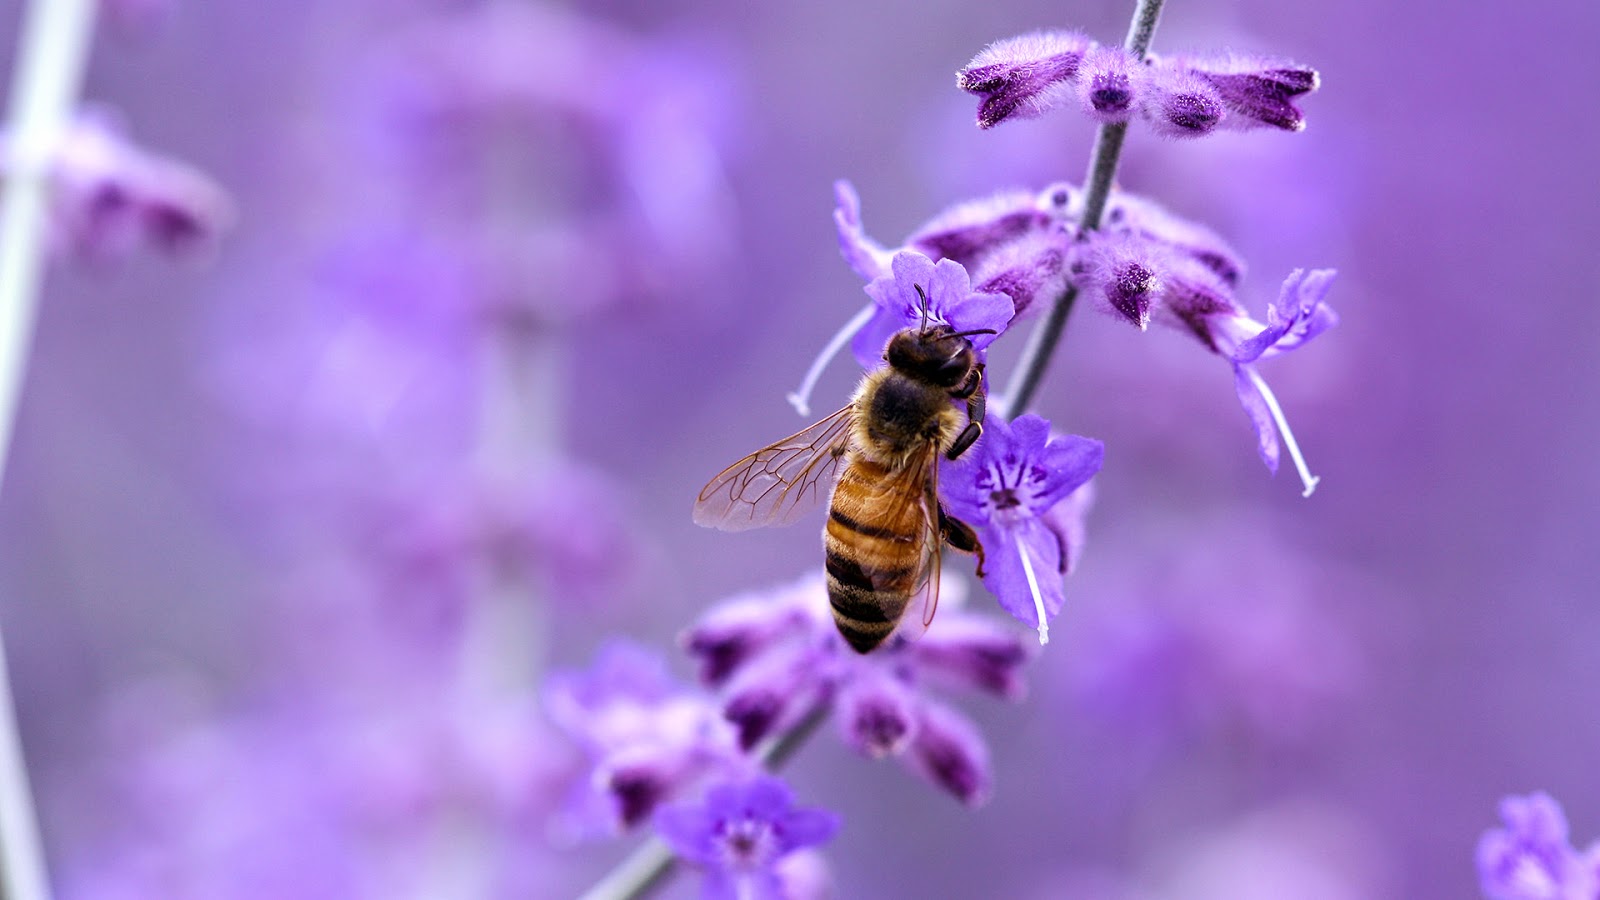 Purple-wallpaper-backgrounds-bee.jpg